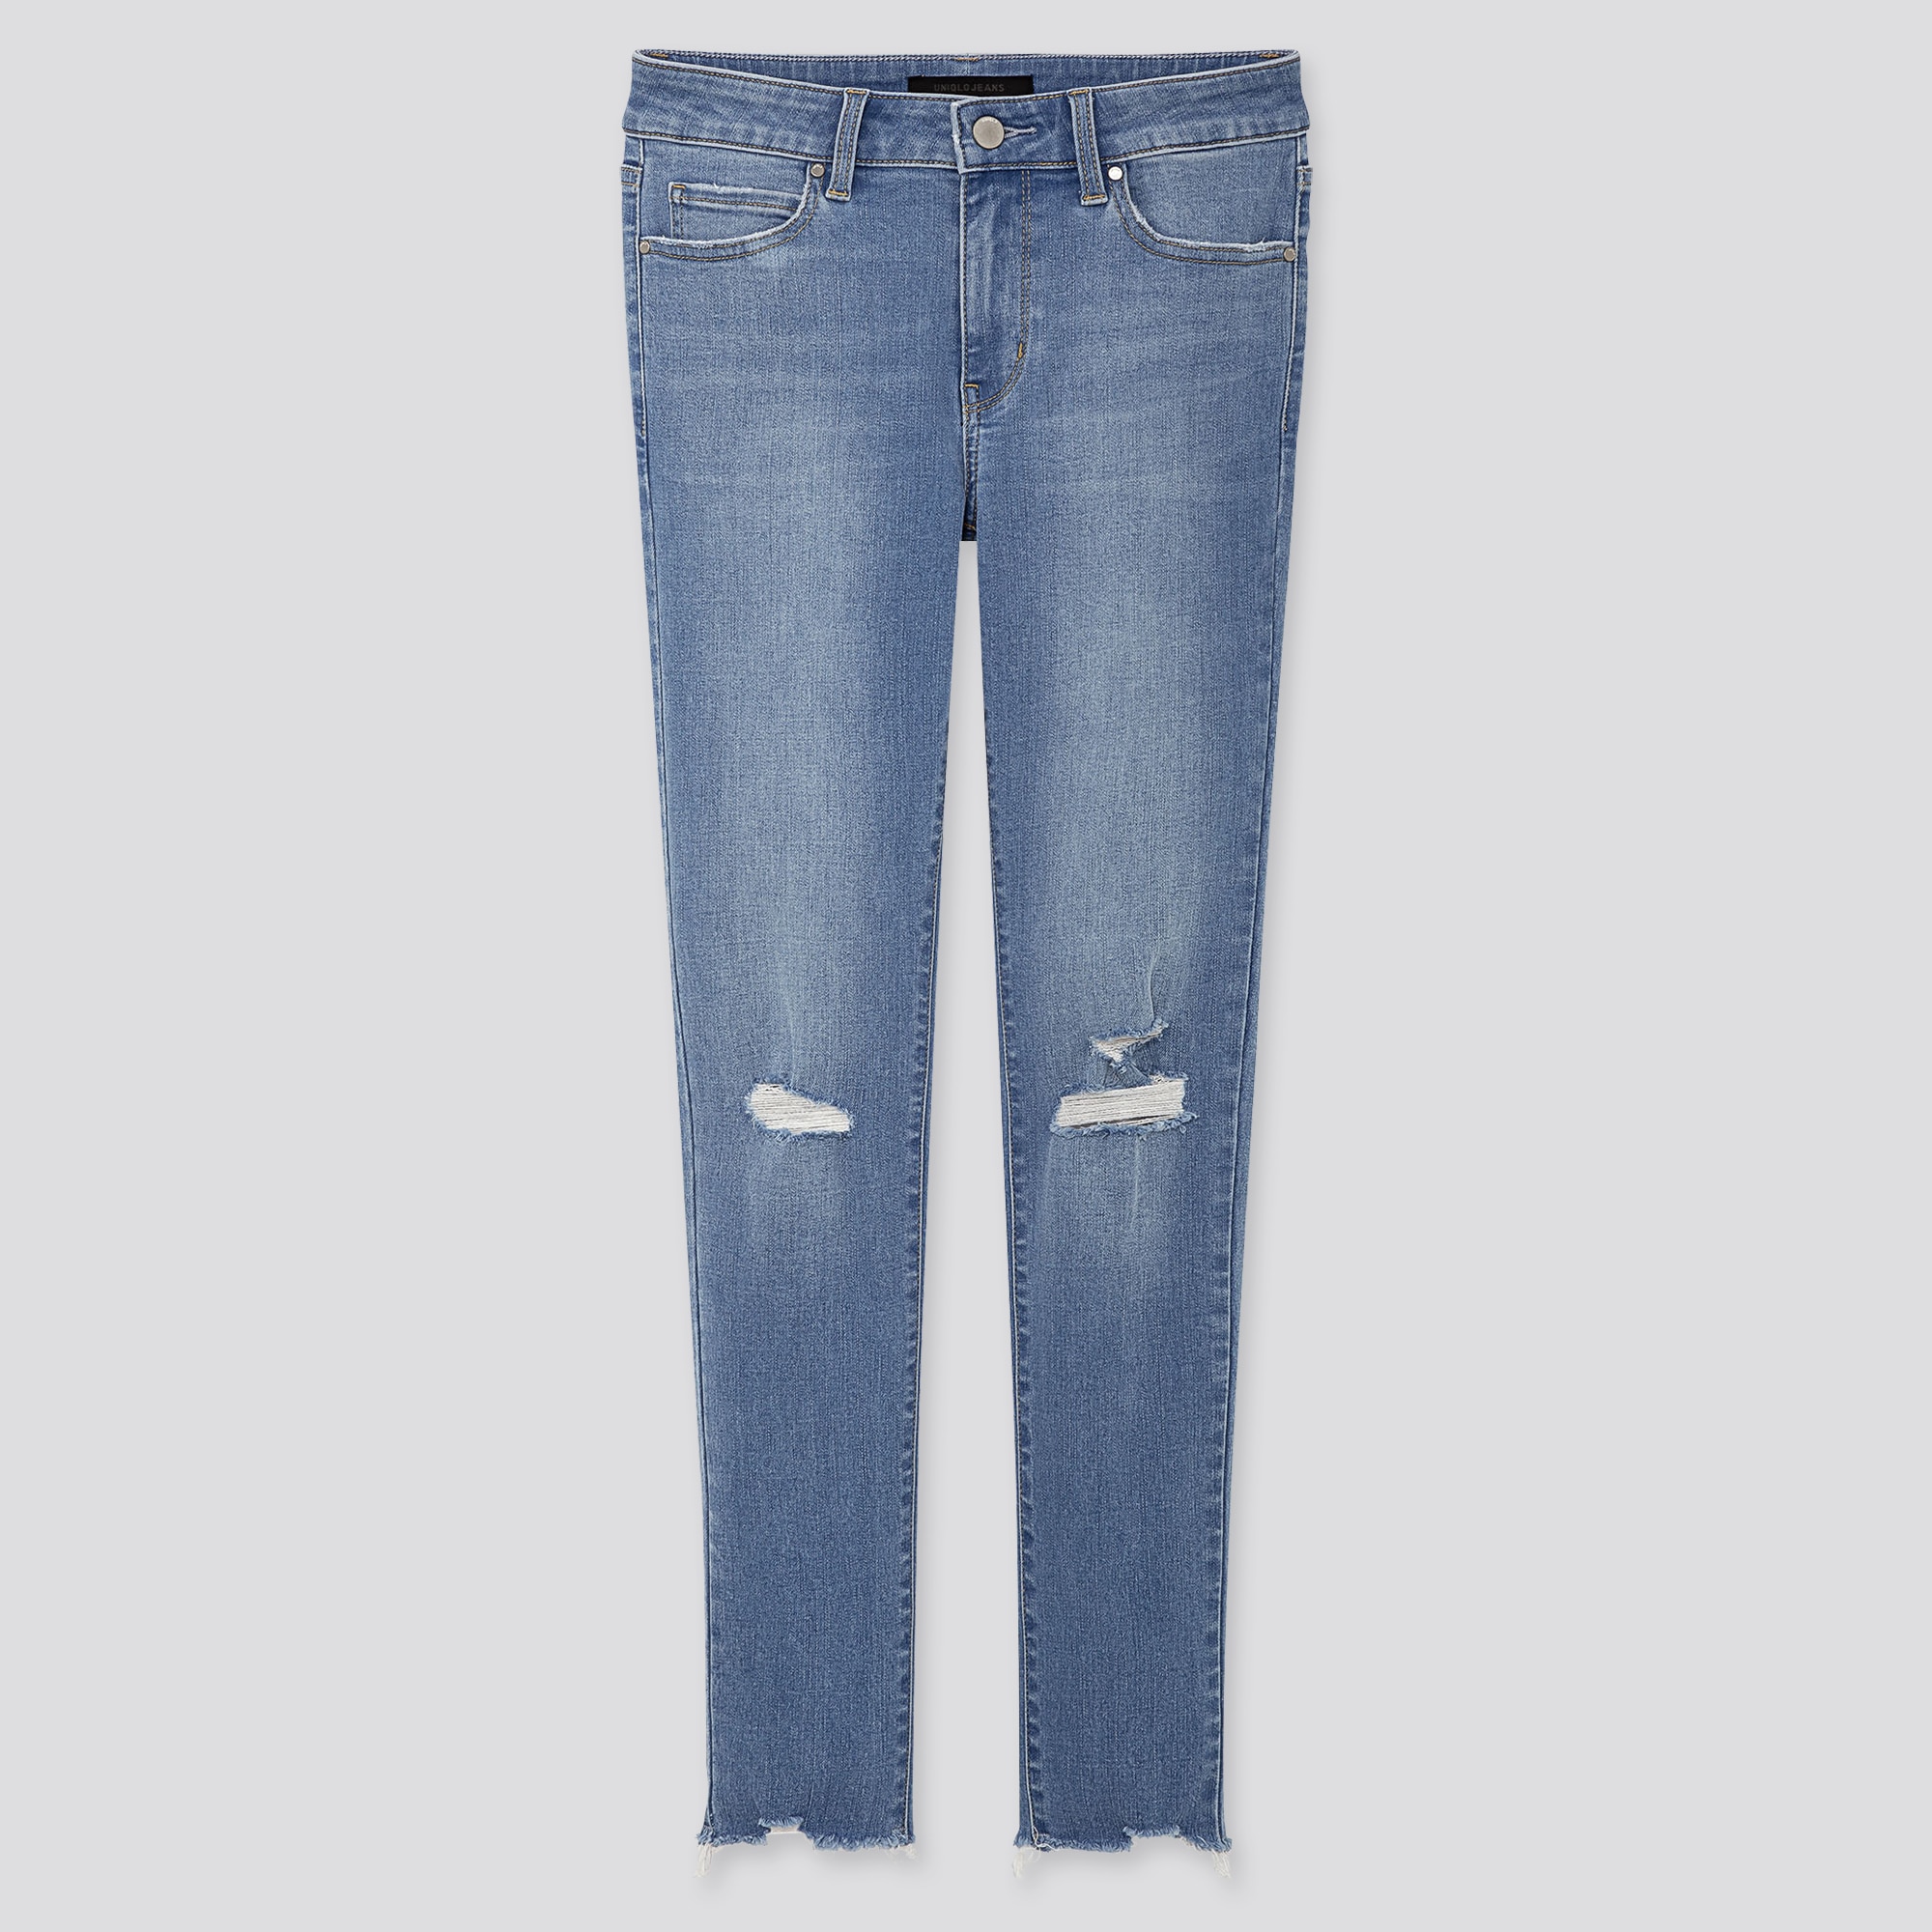 uniqlo damaged jeans